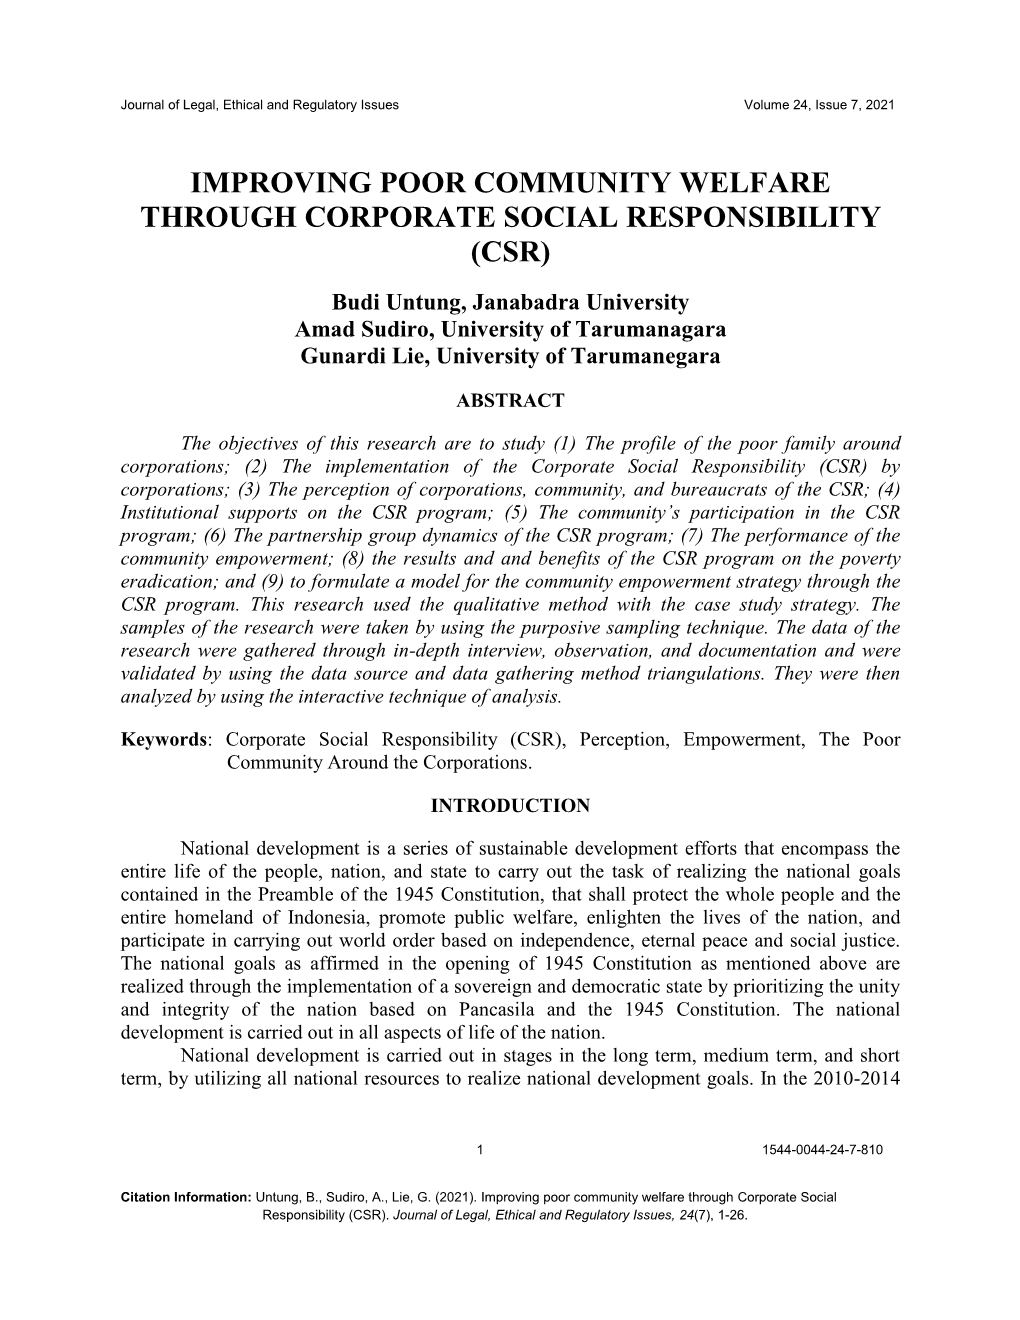 Improving Poor Community Welfare Through